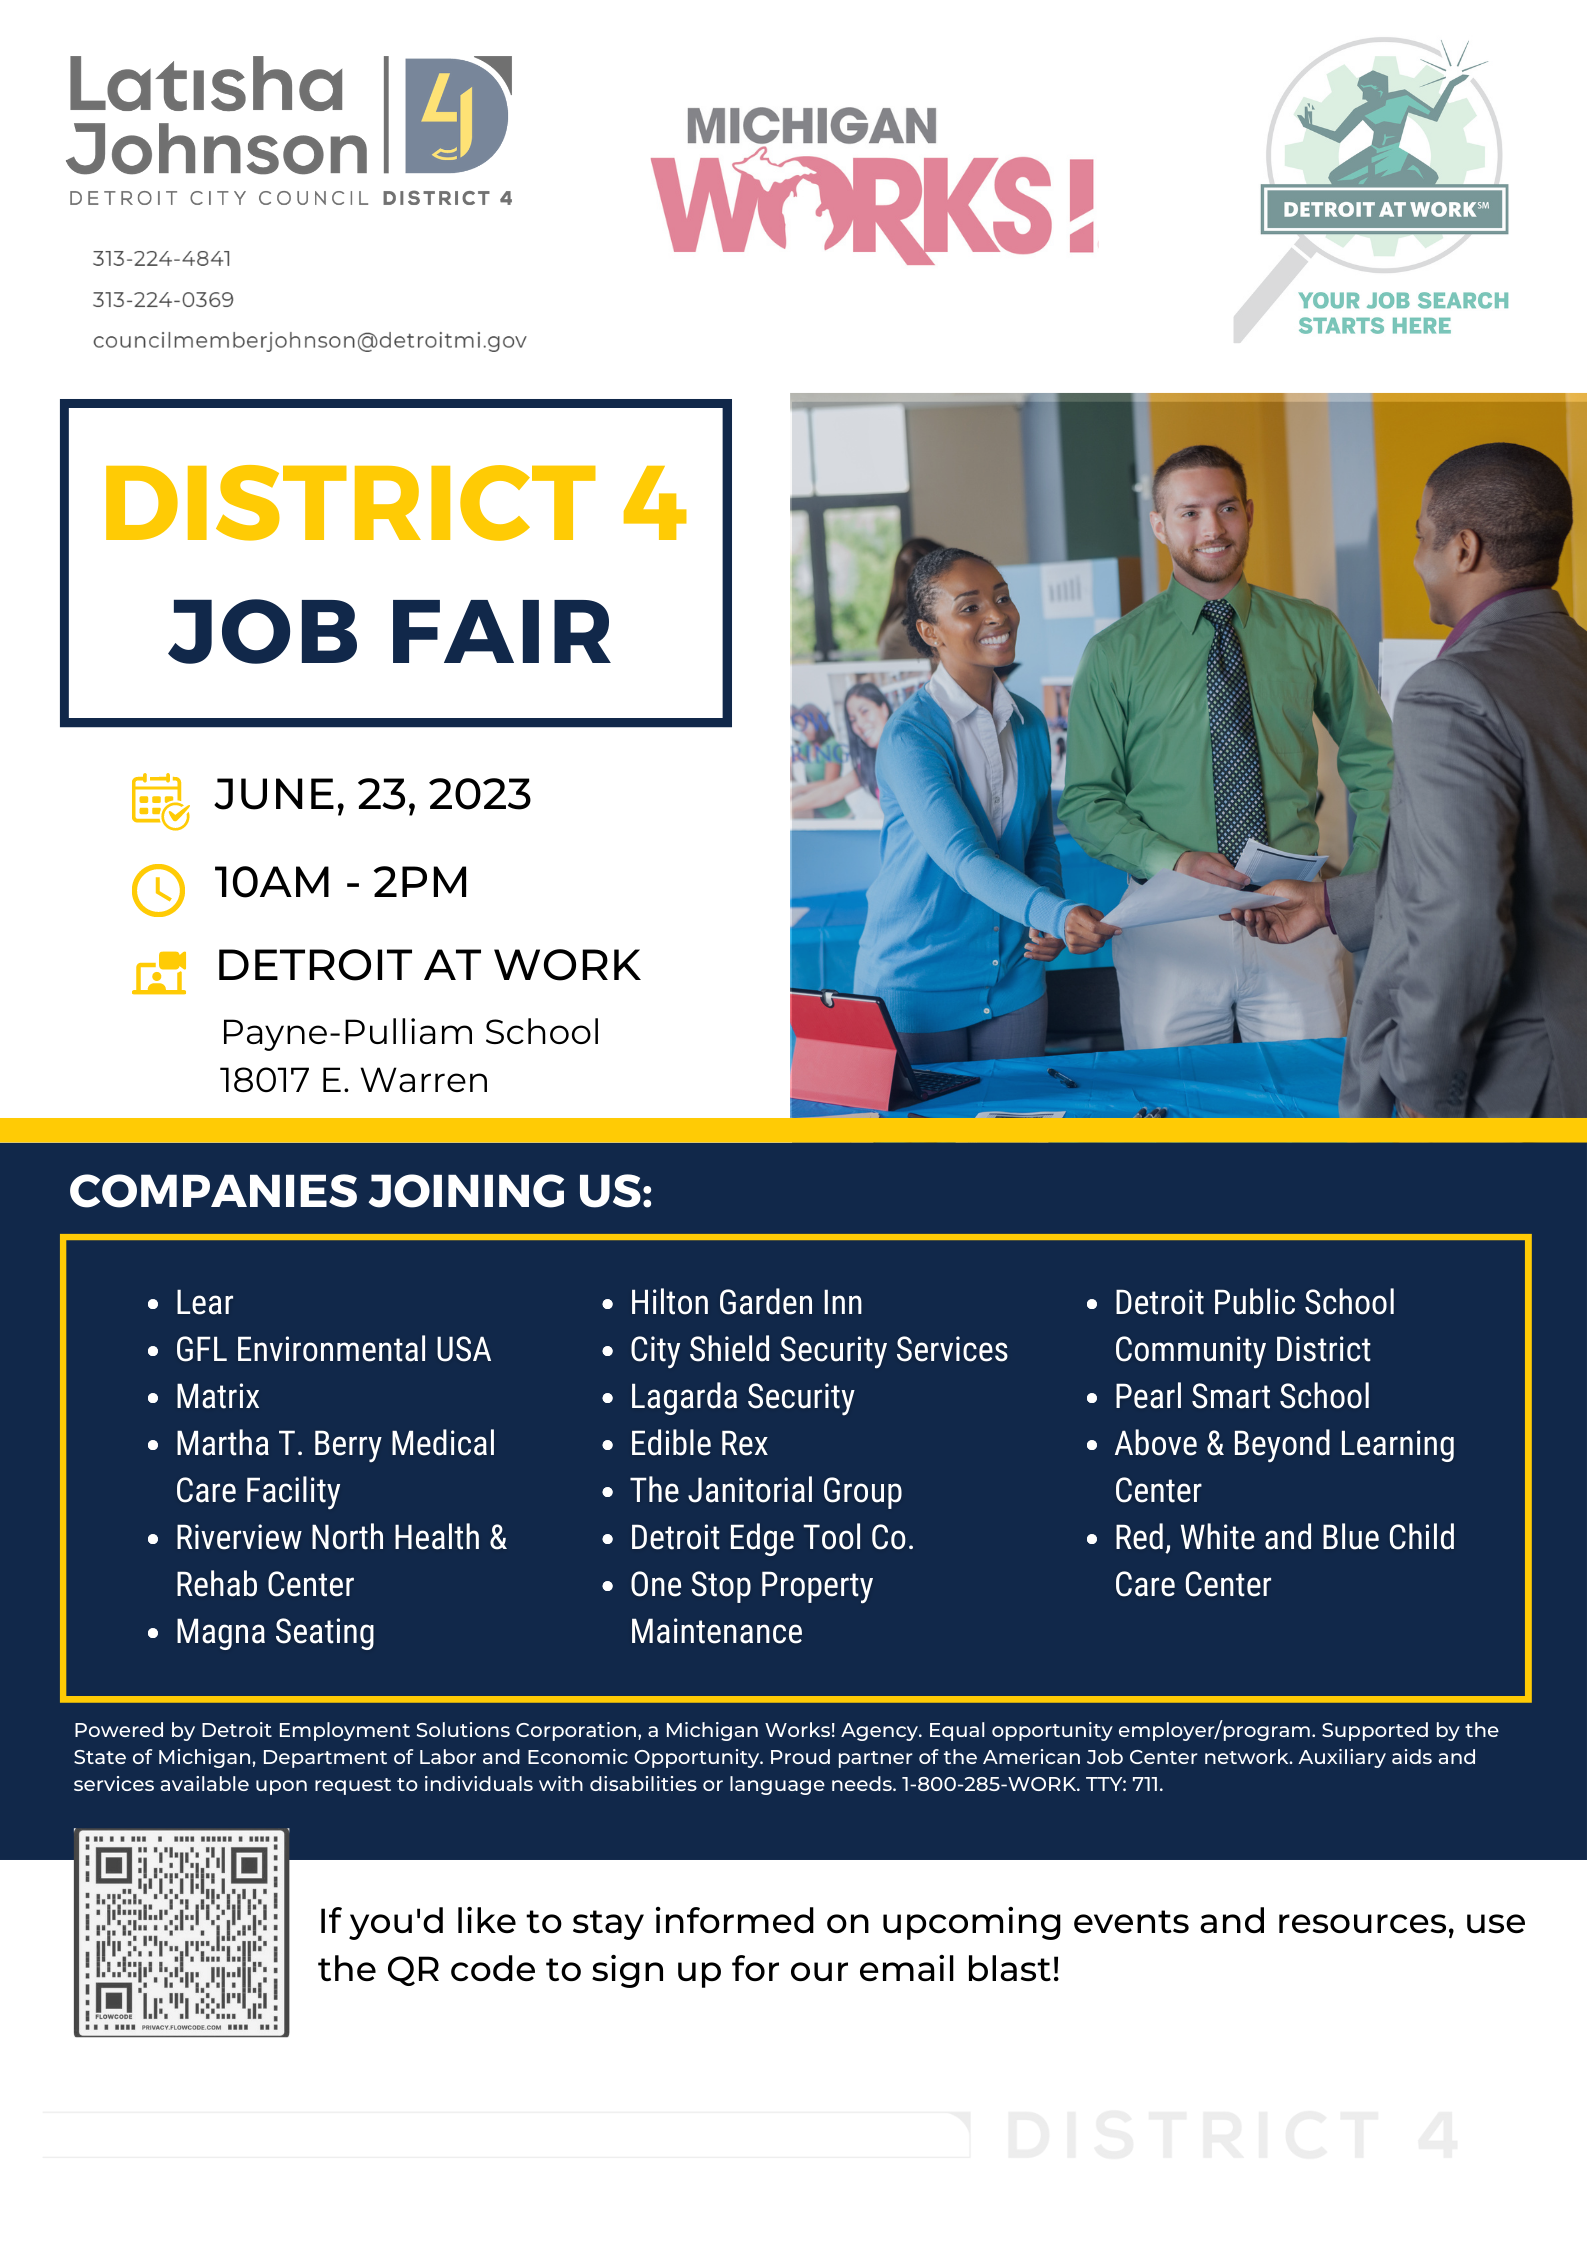 Flyer with Job Fair event details